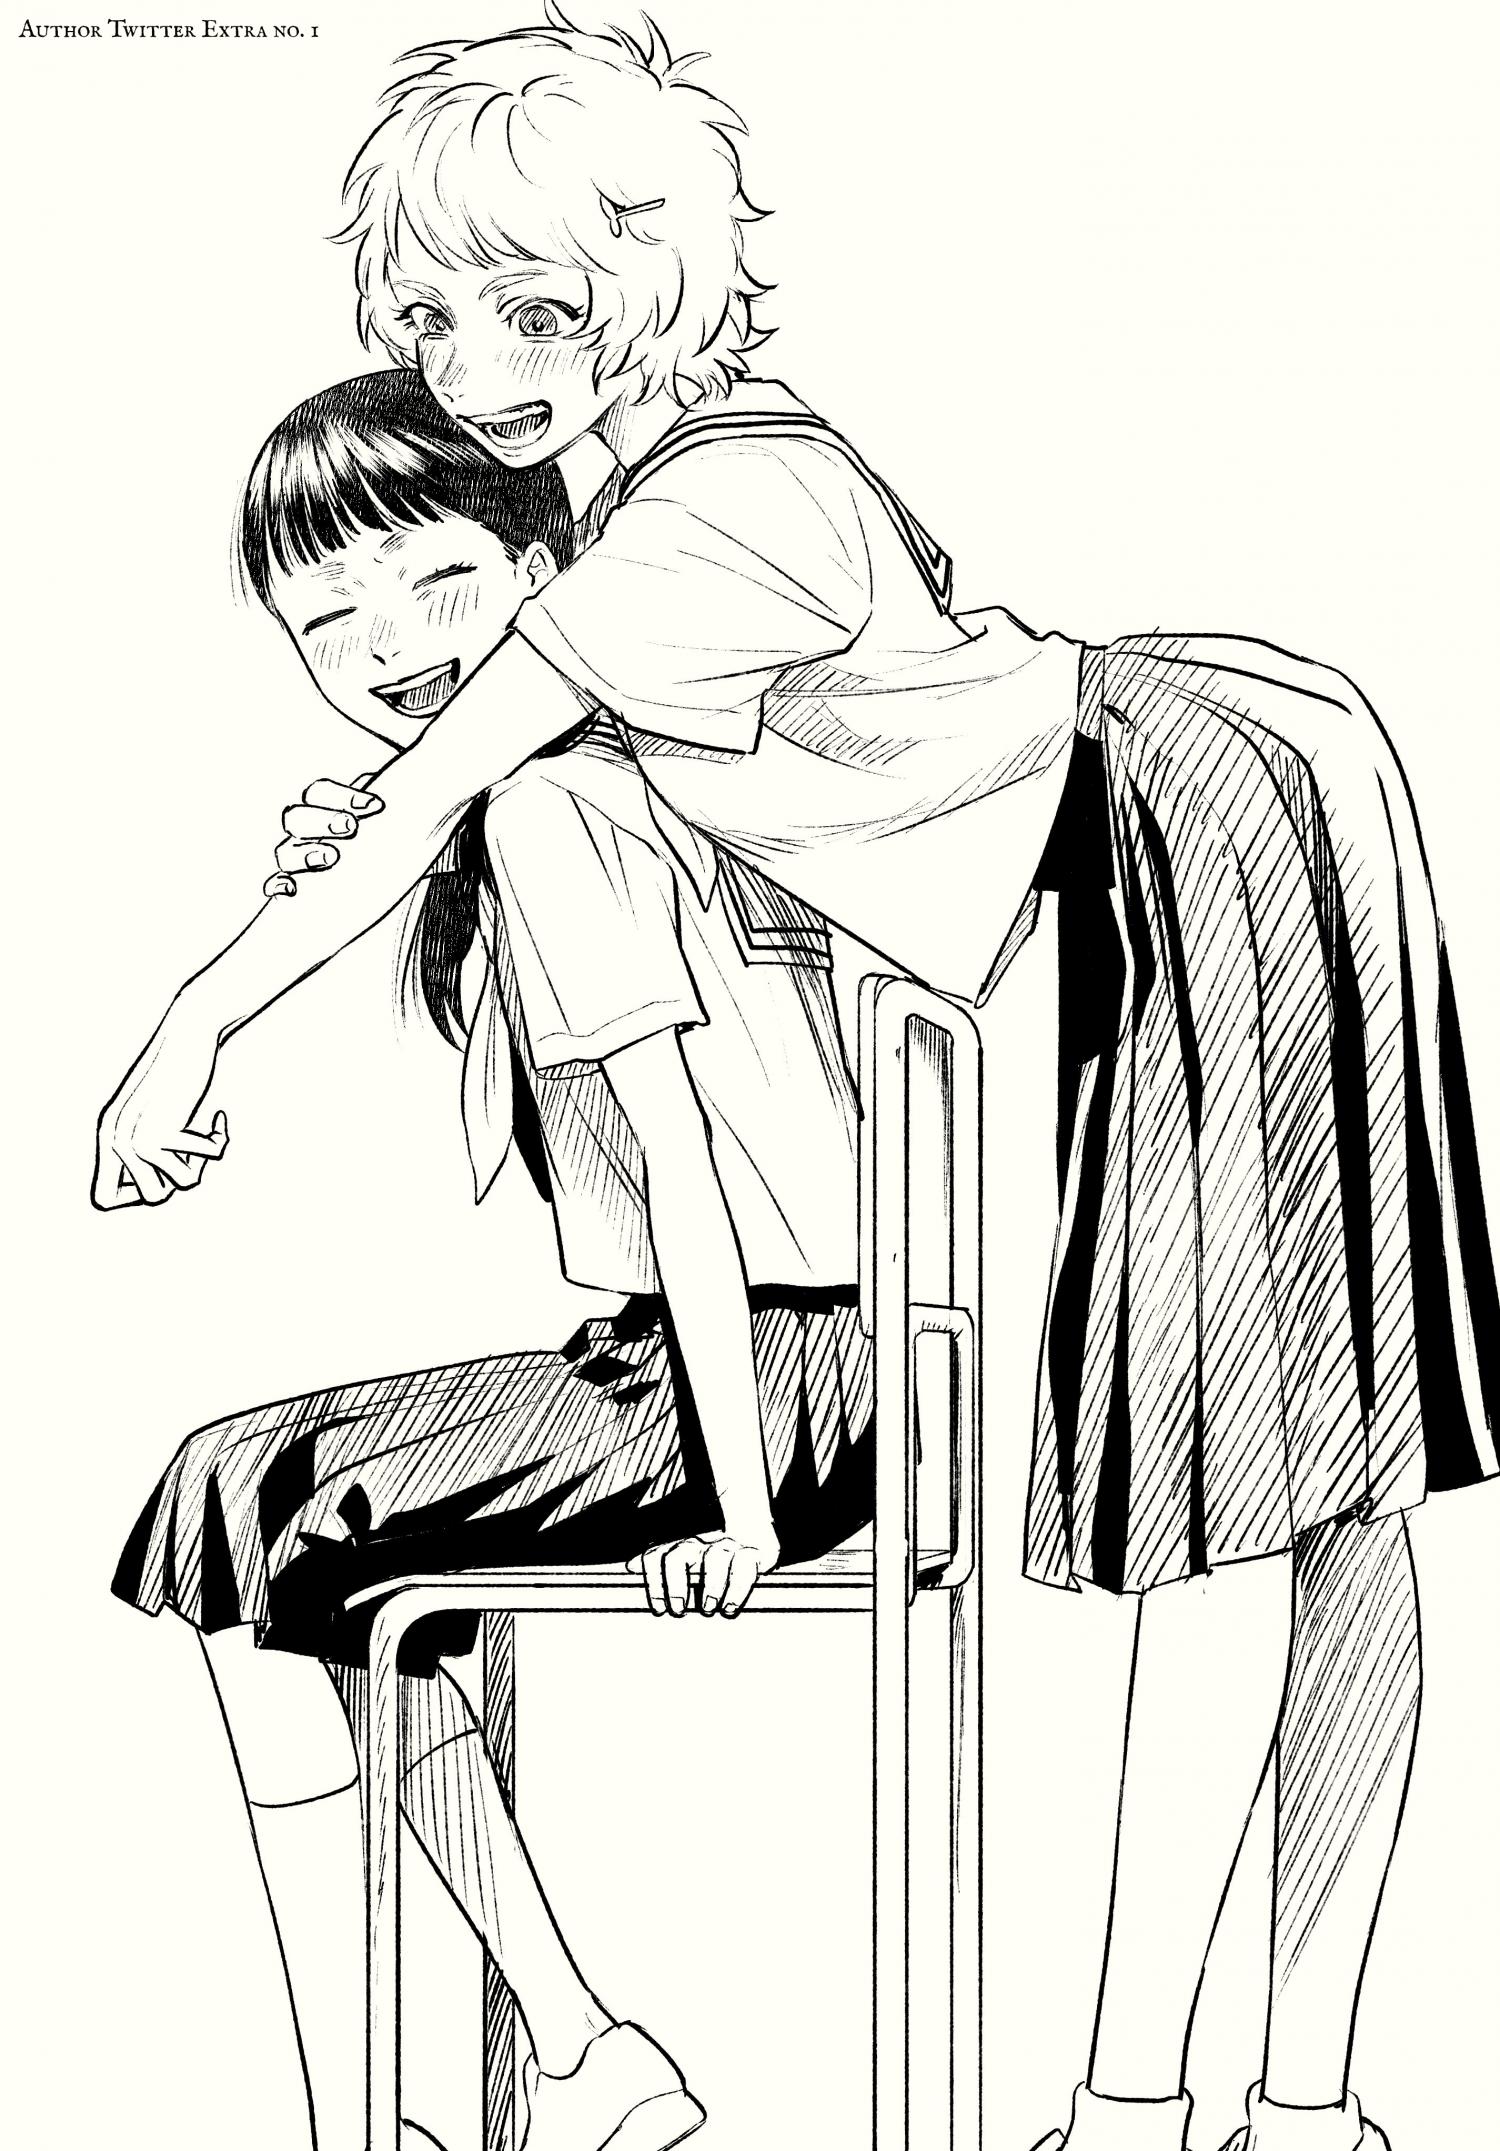 Manga with similar art style like Hikaru Ga Shinda Natsu? : r/manga